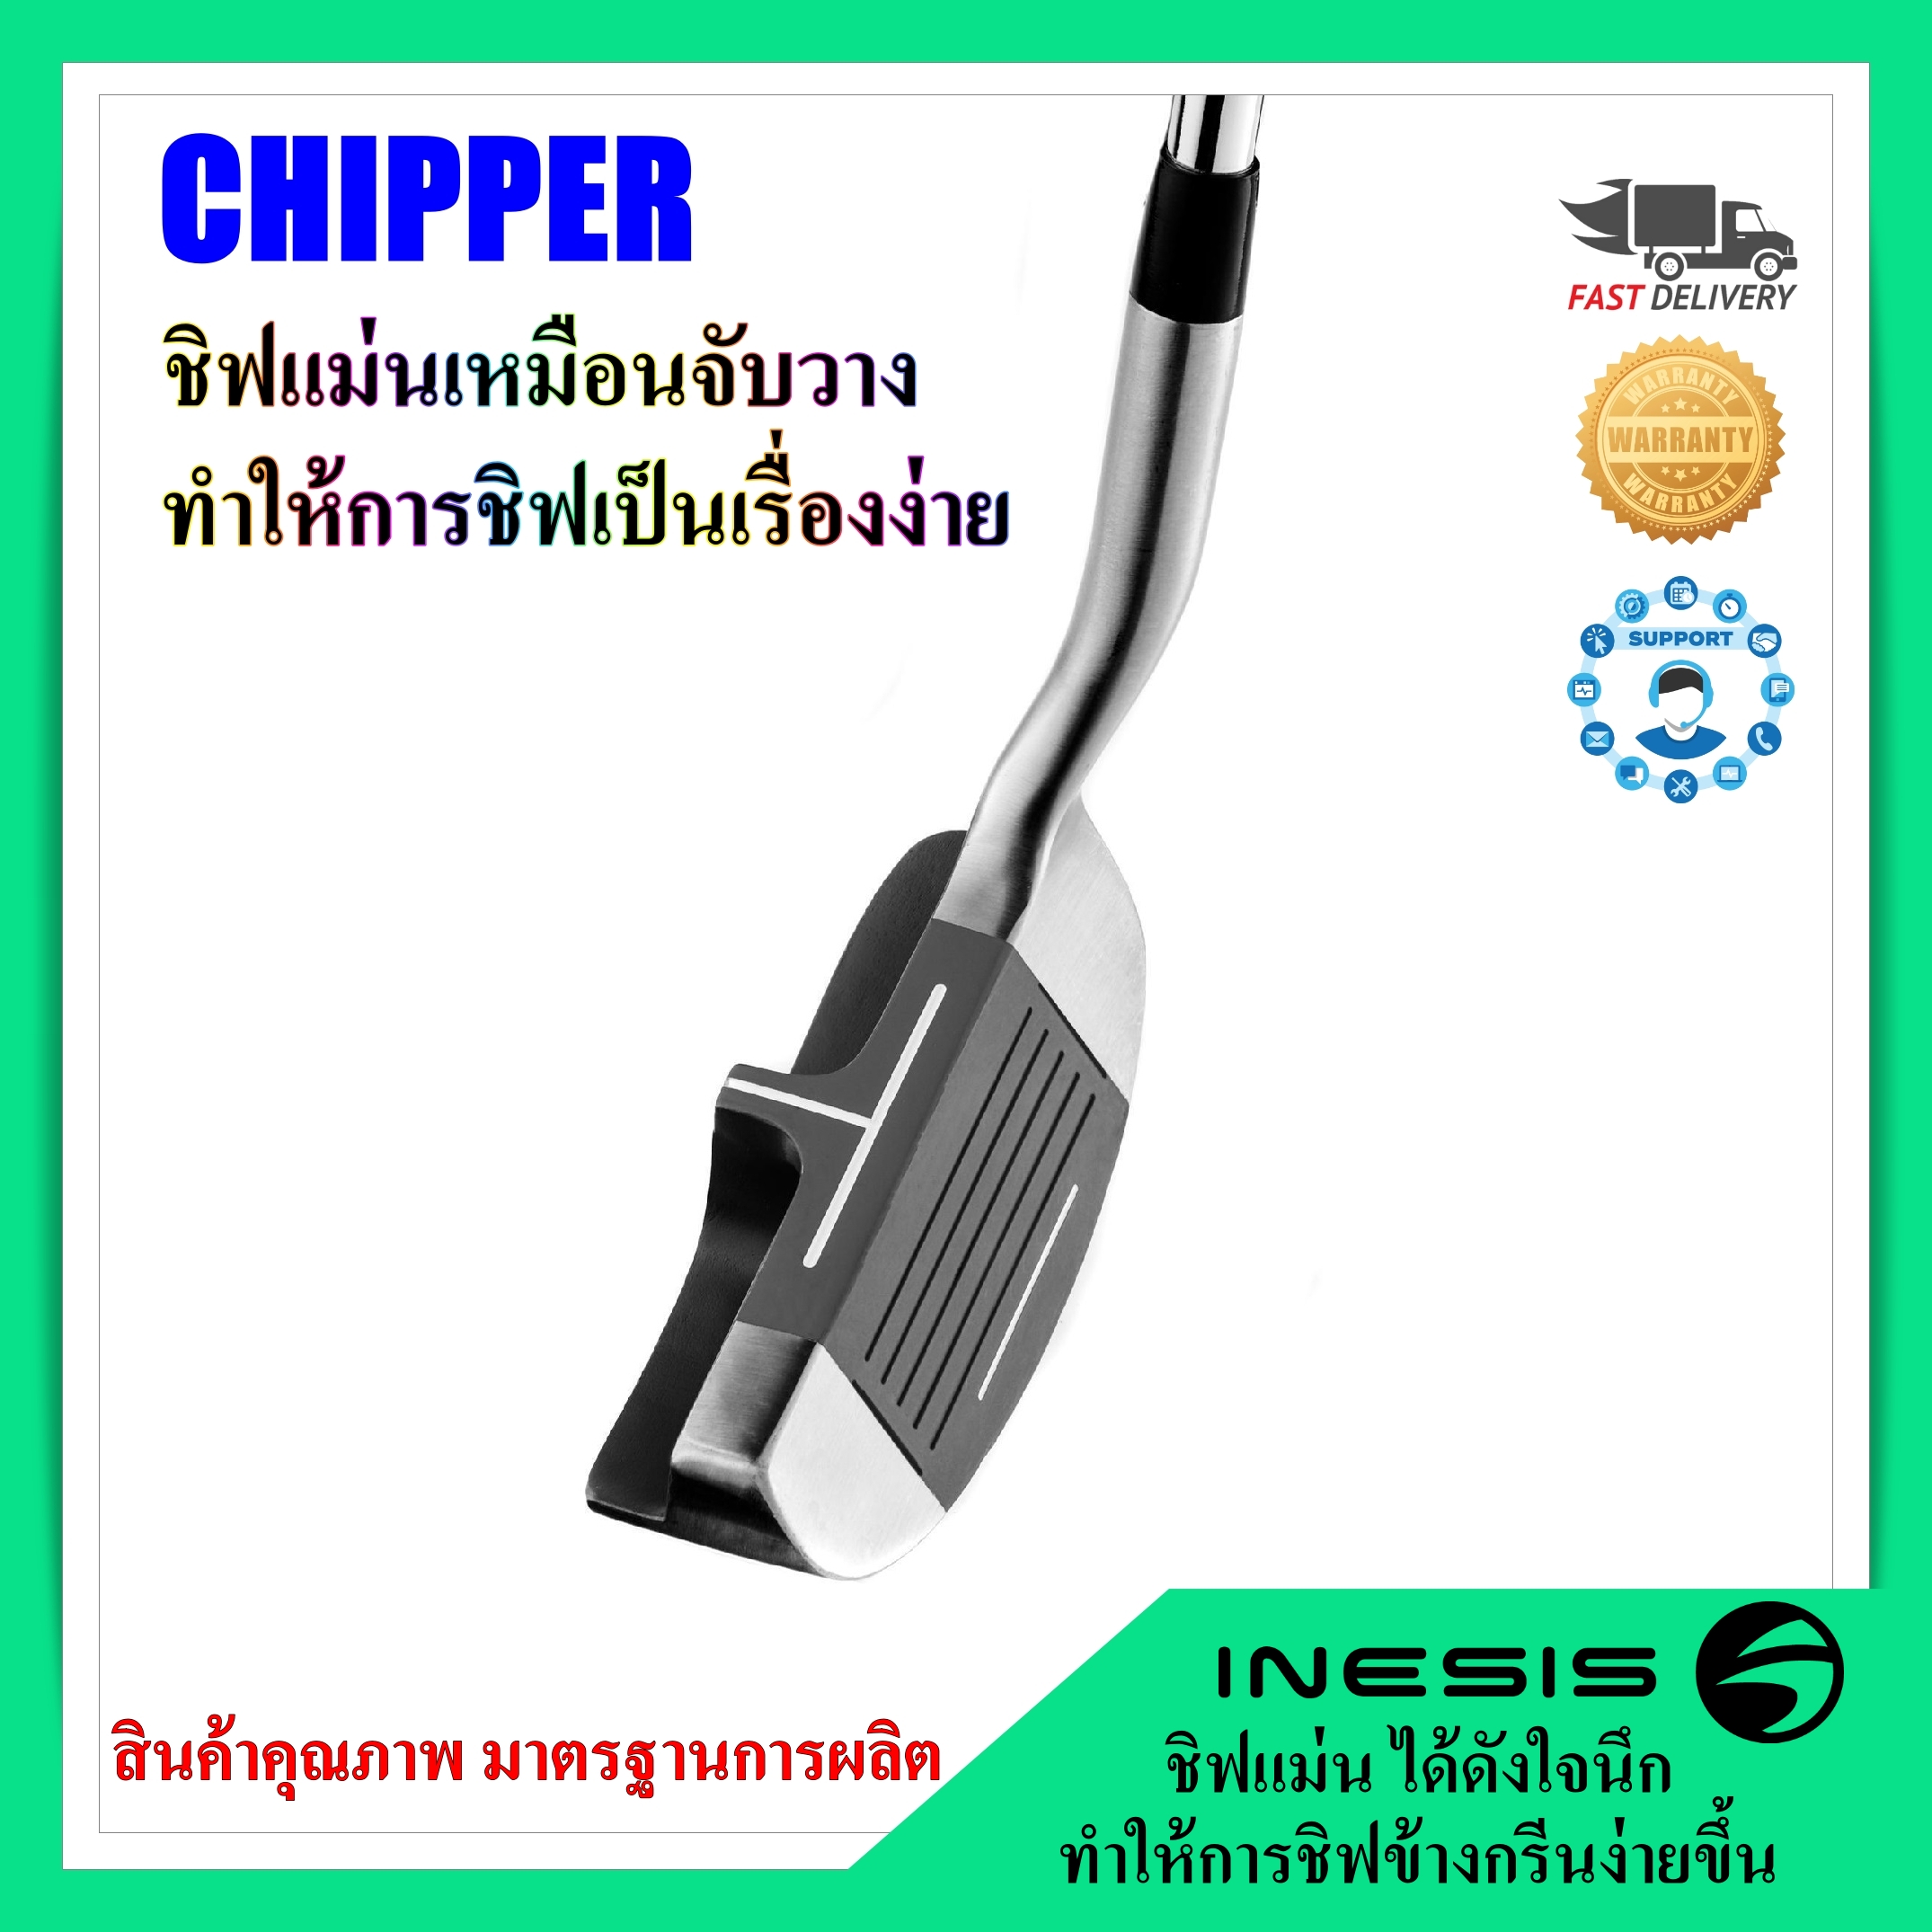 CHIPPER INESIS  ชิปเปอร์ ใช้ง่าย ลดสกอร์ได้ดี ไม้กอล์ฟ สำหรับผู้ใหญ่ (ถนัดมือขวา) รุ่น 500